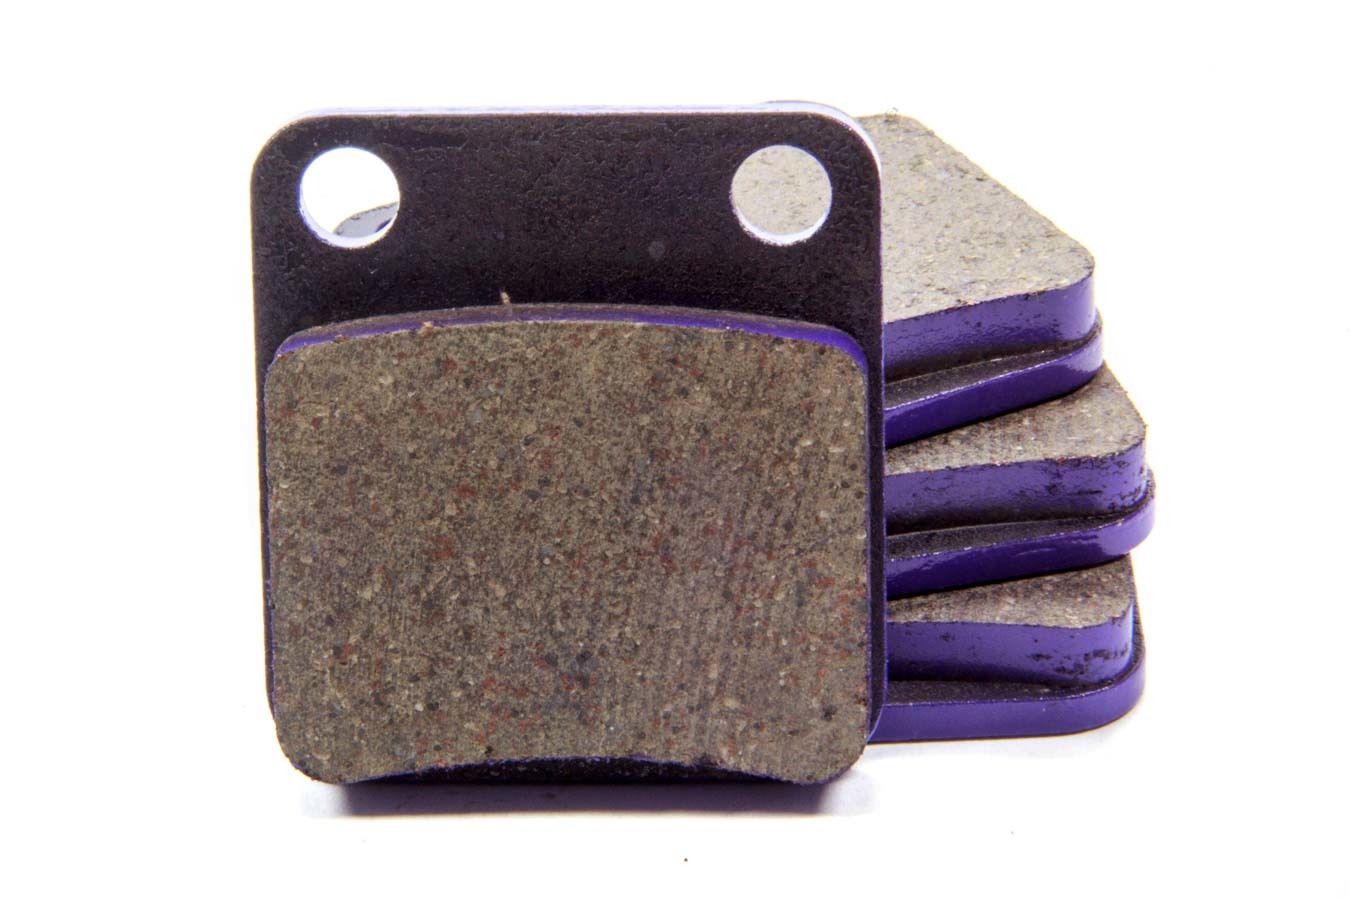 Brake Pads - Purple Compound - Medium Friction - Medium Temperature - GP200 Caliper - Kit